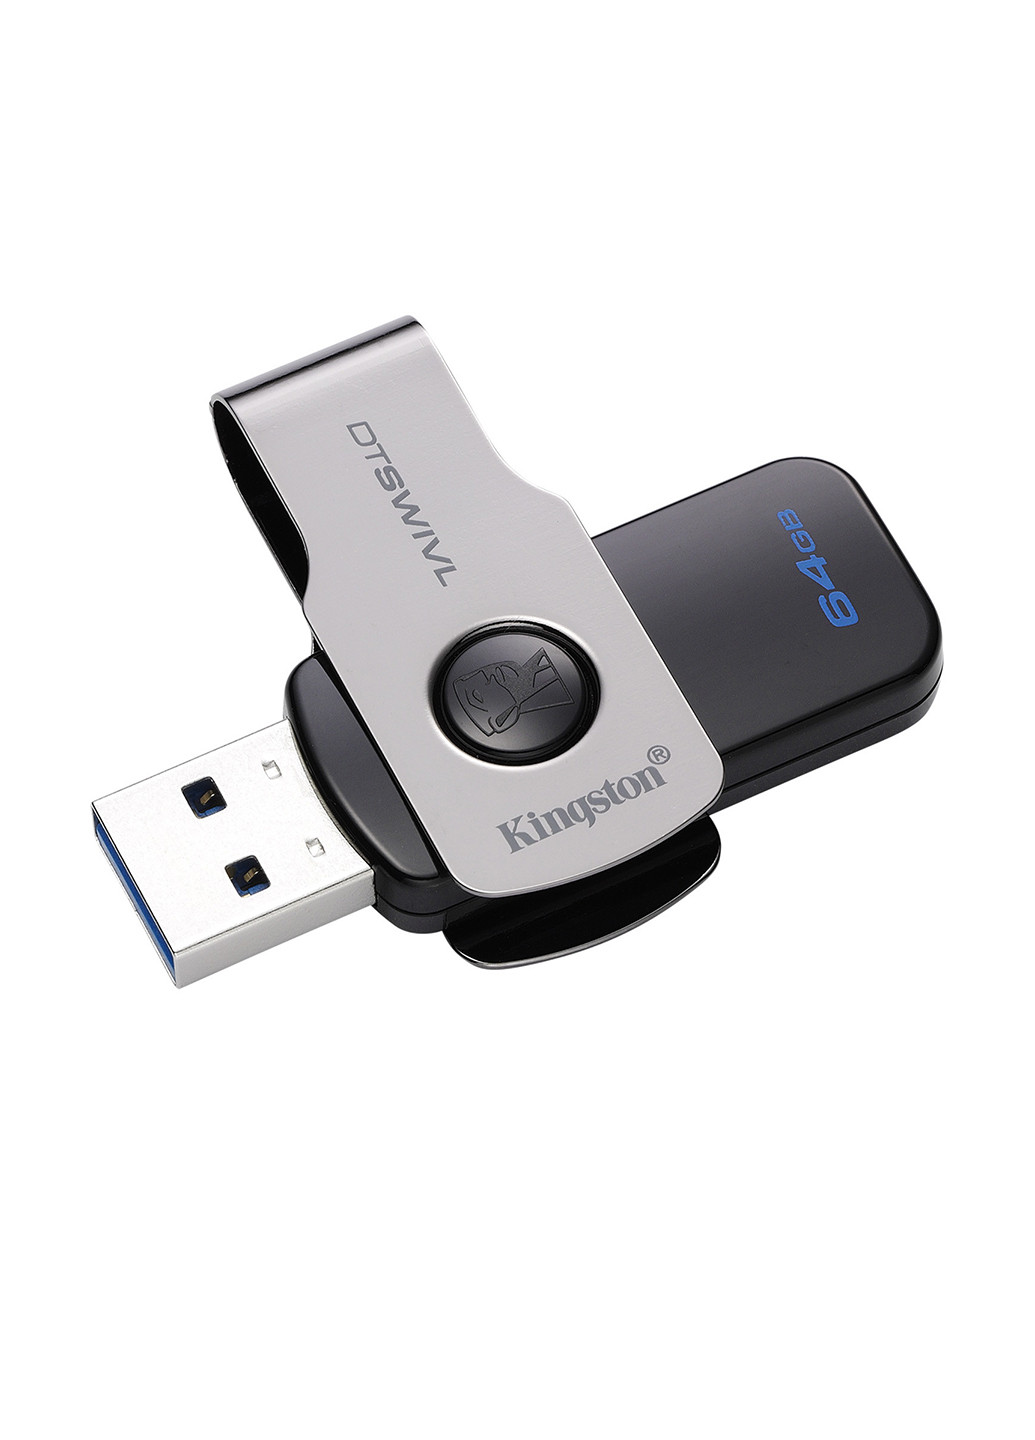 Флеш память USB DataTraveler Swivl 64GB USB 3.0 (DTSWIVL/64GB) Kingston Флеш память USB Kingston DataTraveler Swivl 64GB USB 3.0 (DTSWIVL/64GB) чёрные